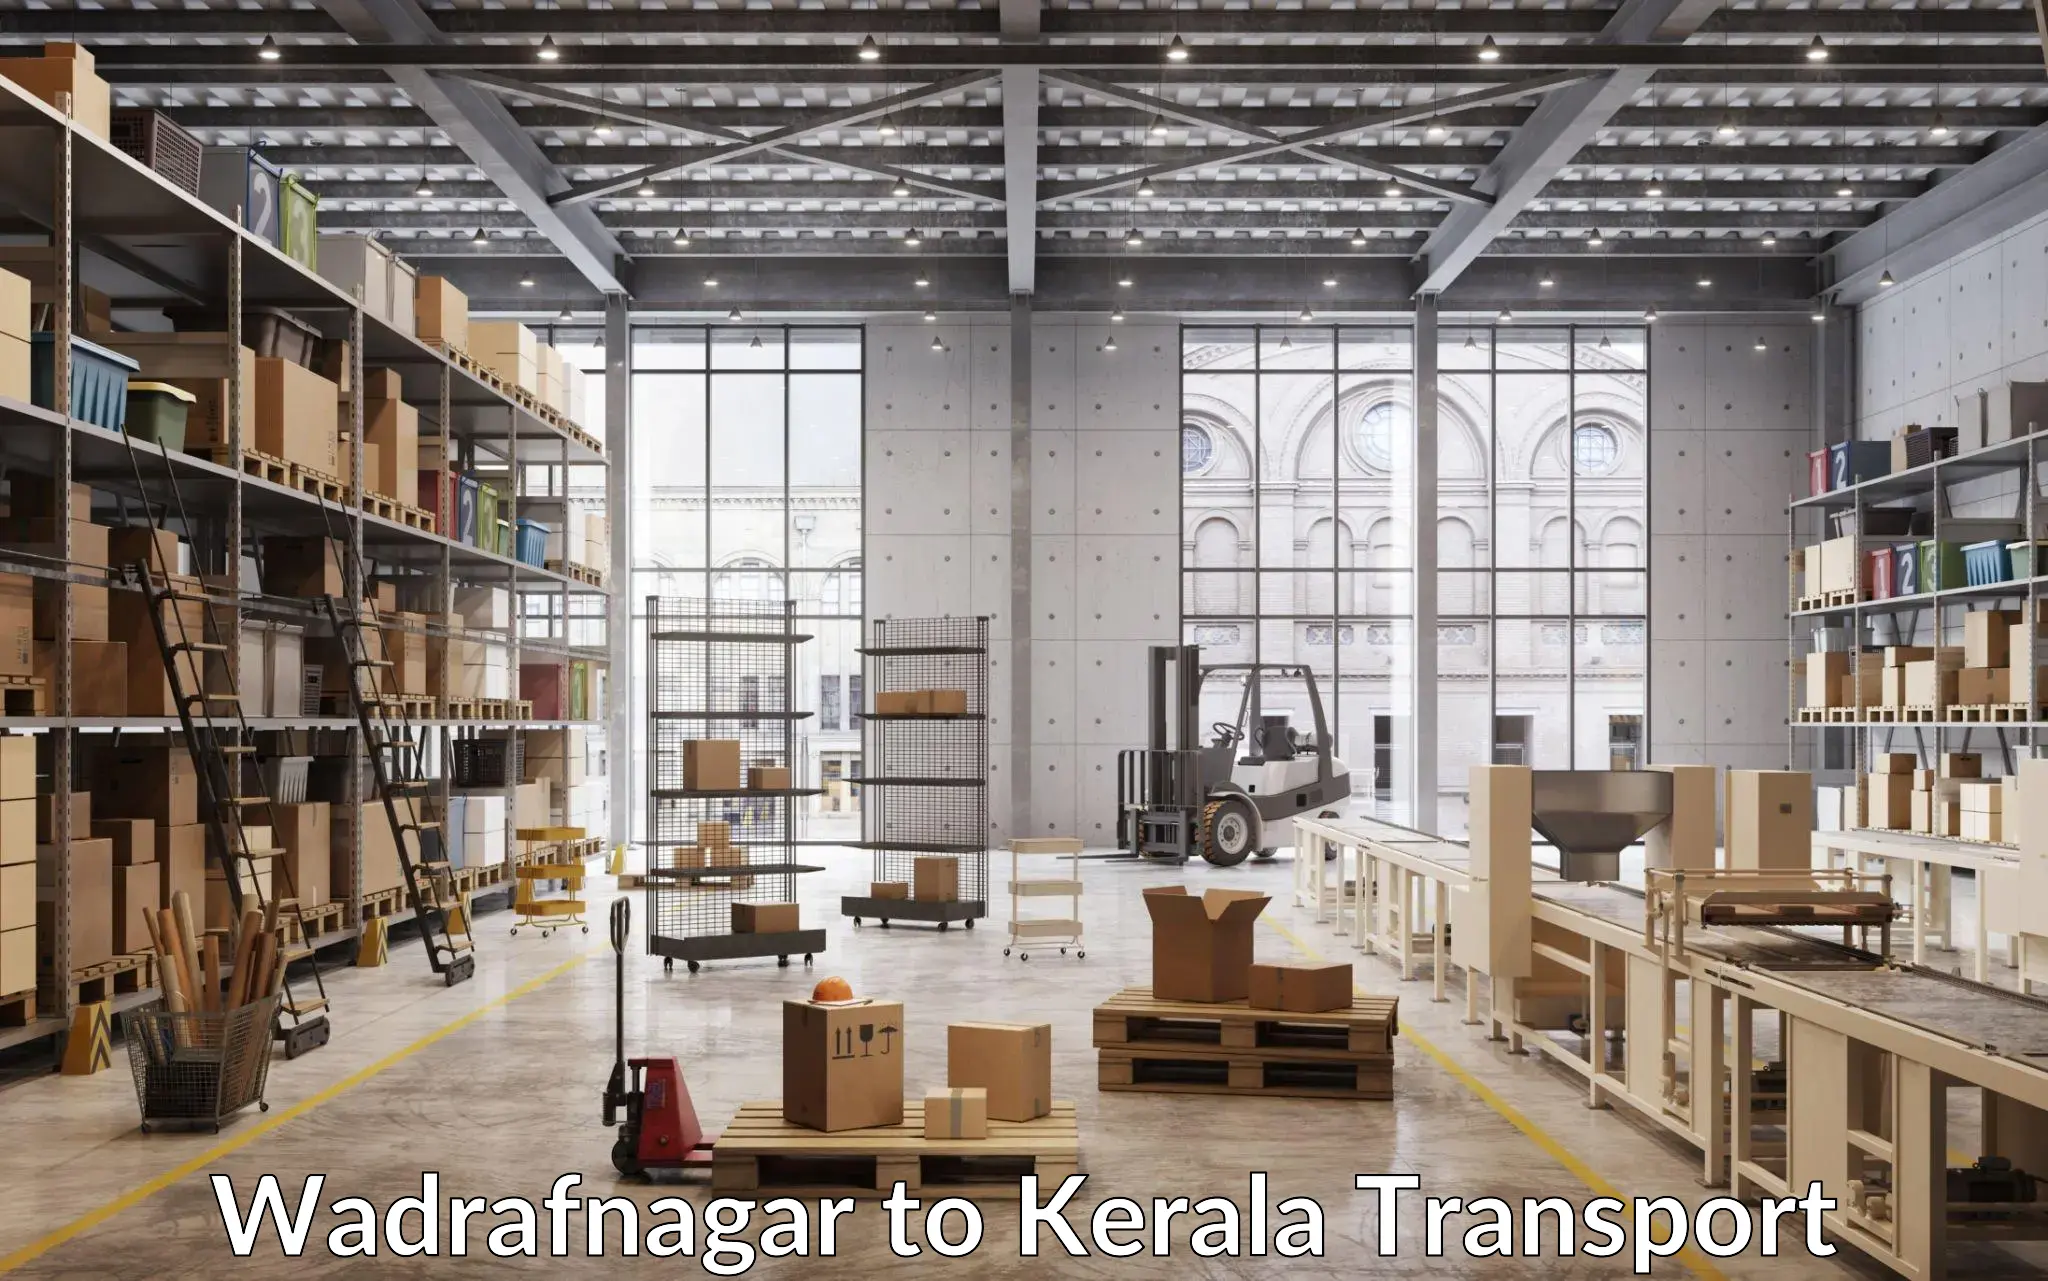 Bike transport service Wadrafnagar to Kattappana